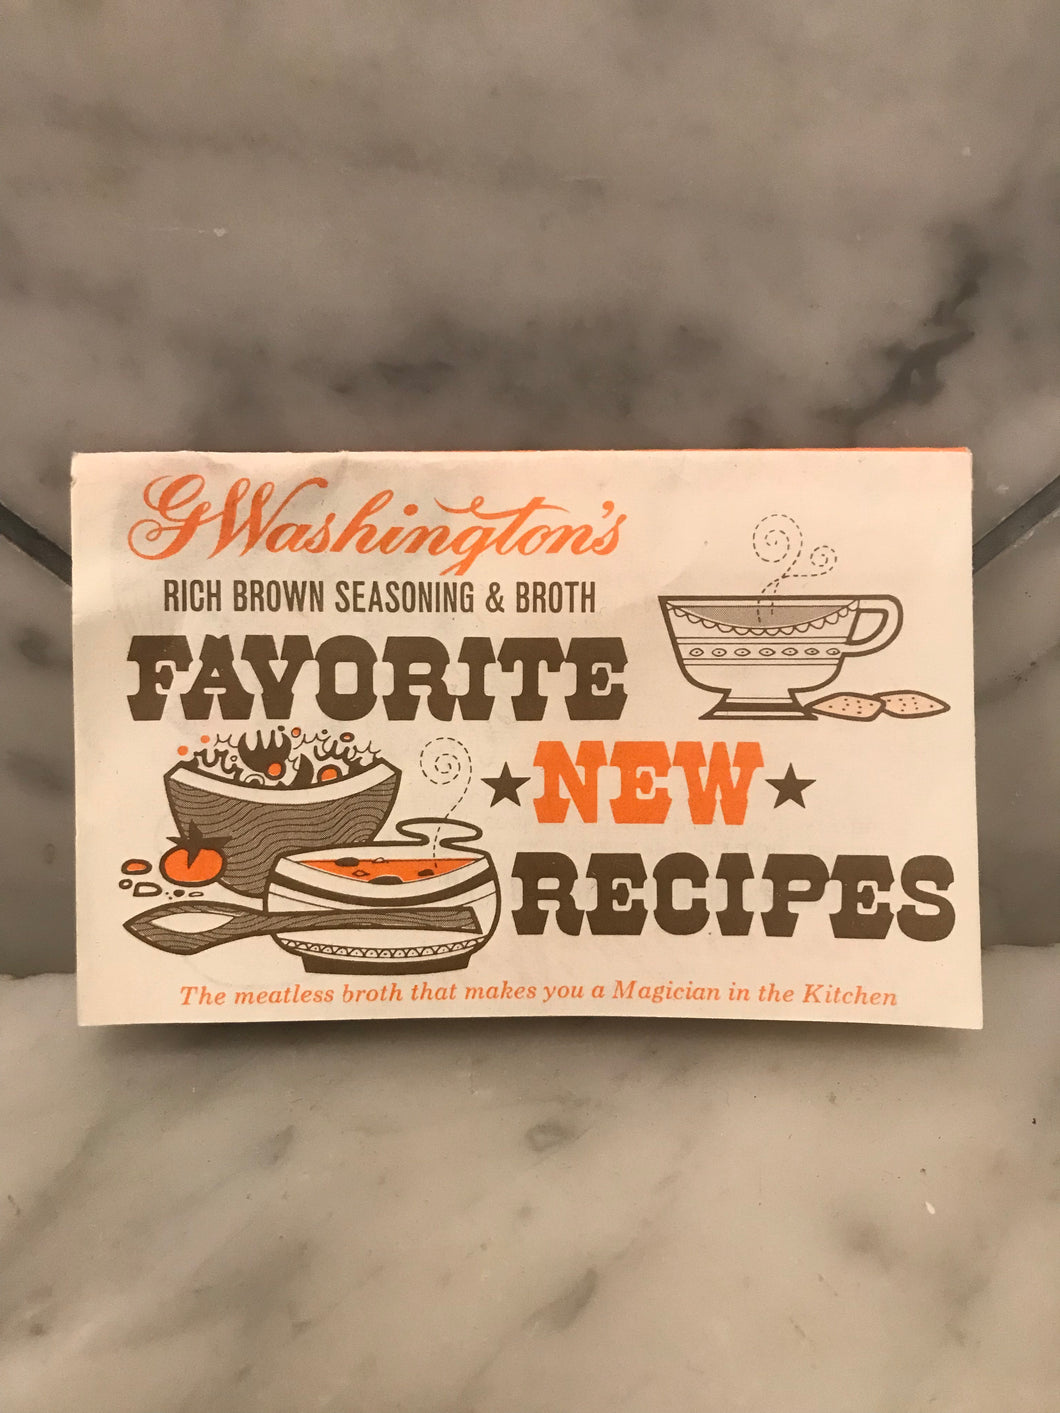 G Washington's Rich Brown Seasoning and Broth, Favorite New Recipes